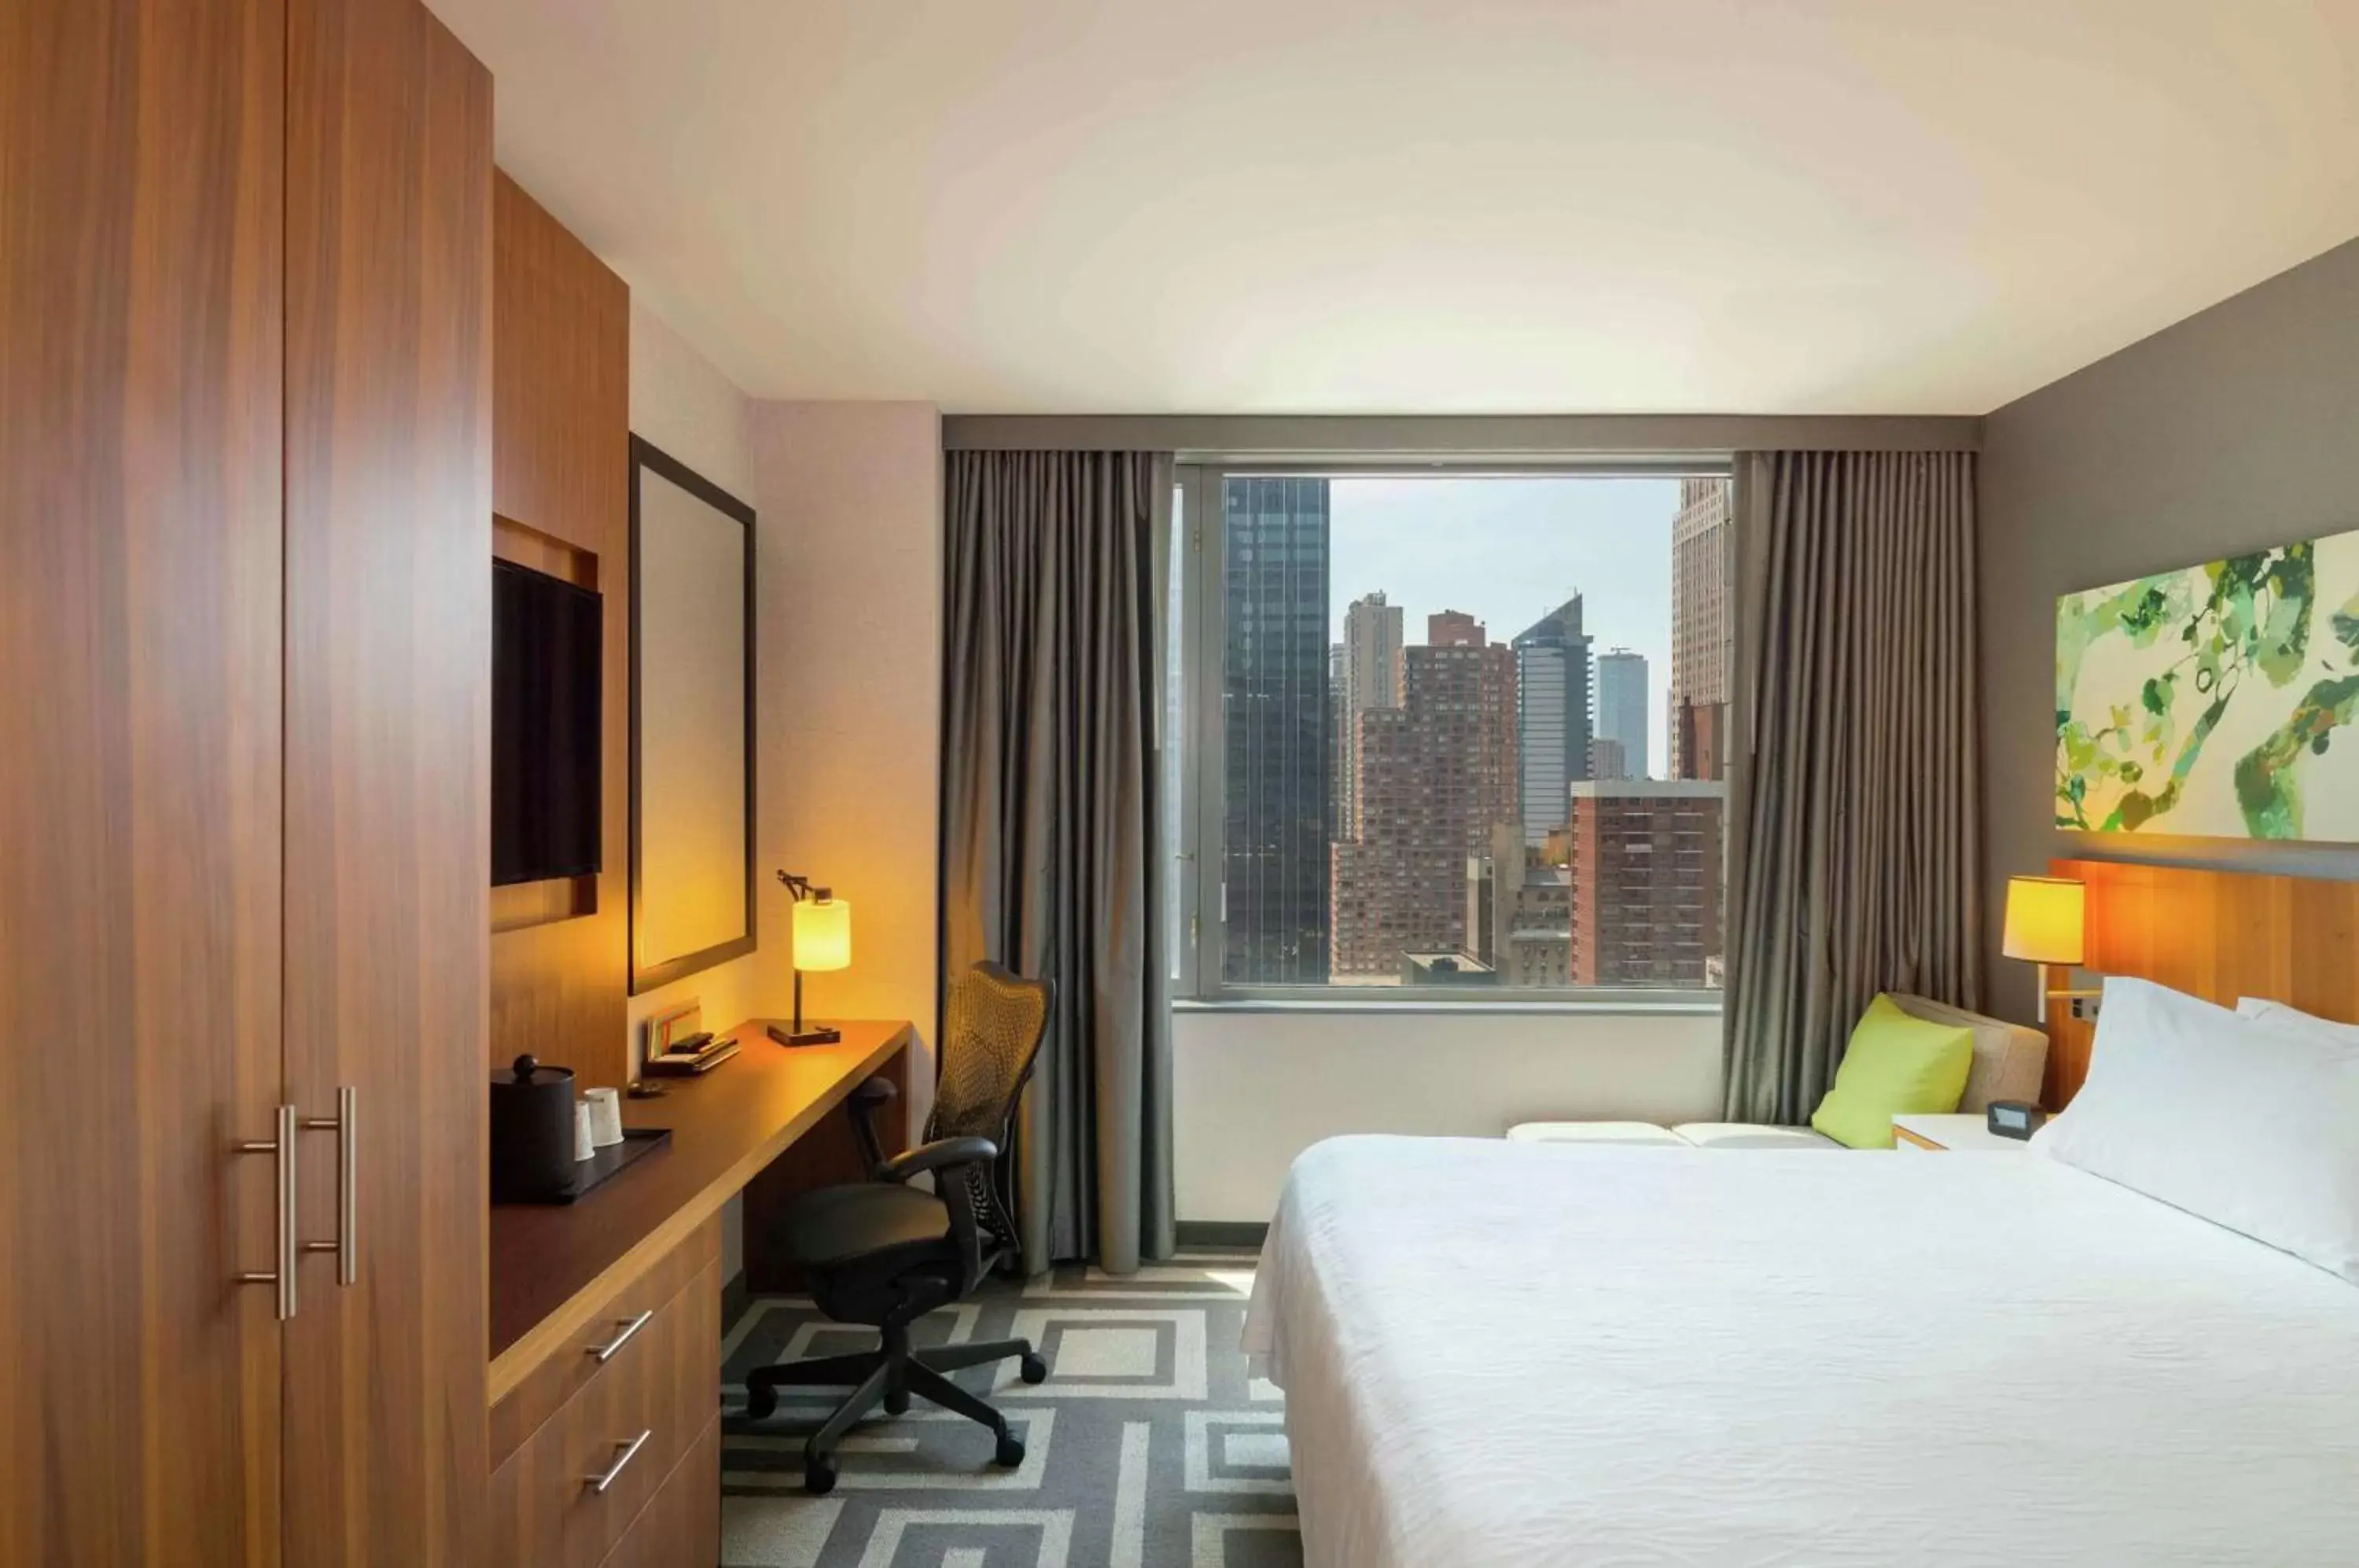 Bedroom in Hilton Garden Inn New York Central Park South-Midtown West